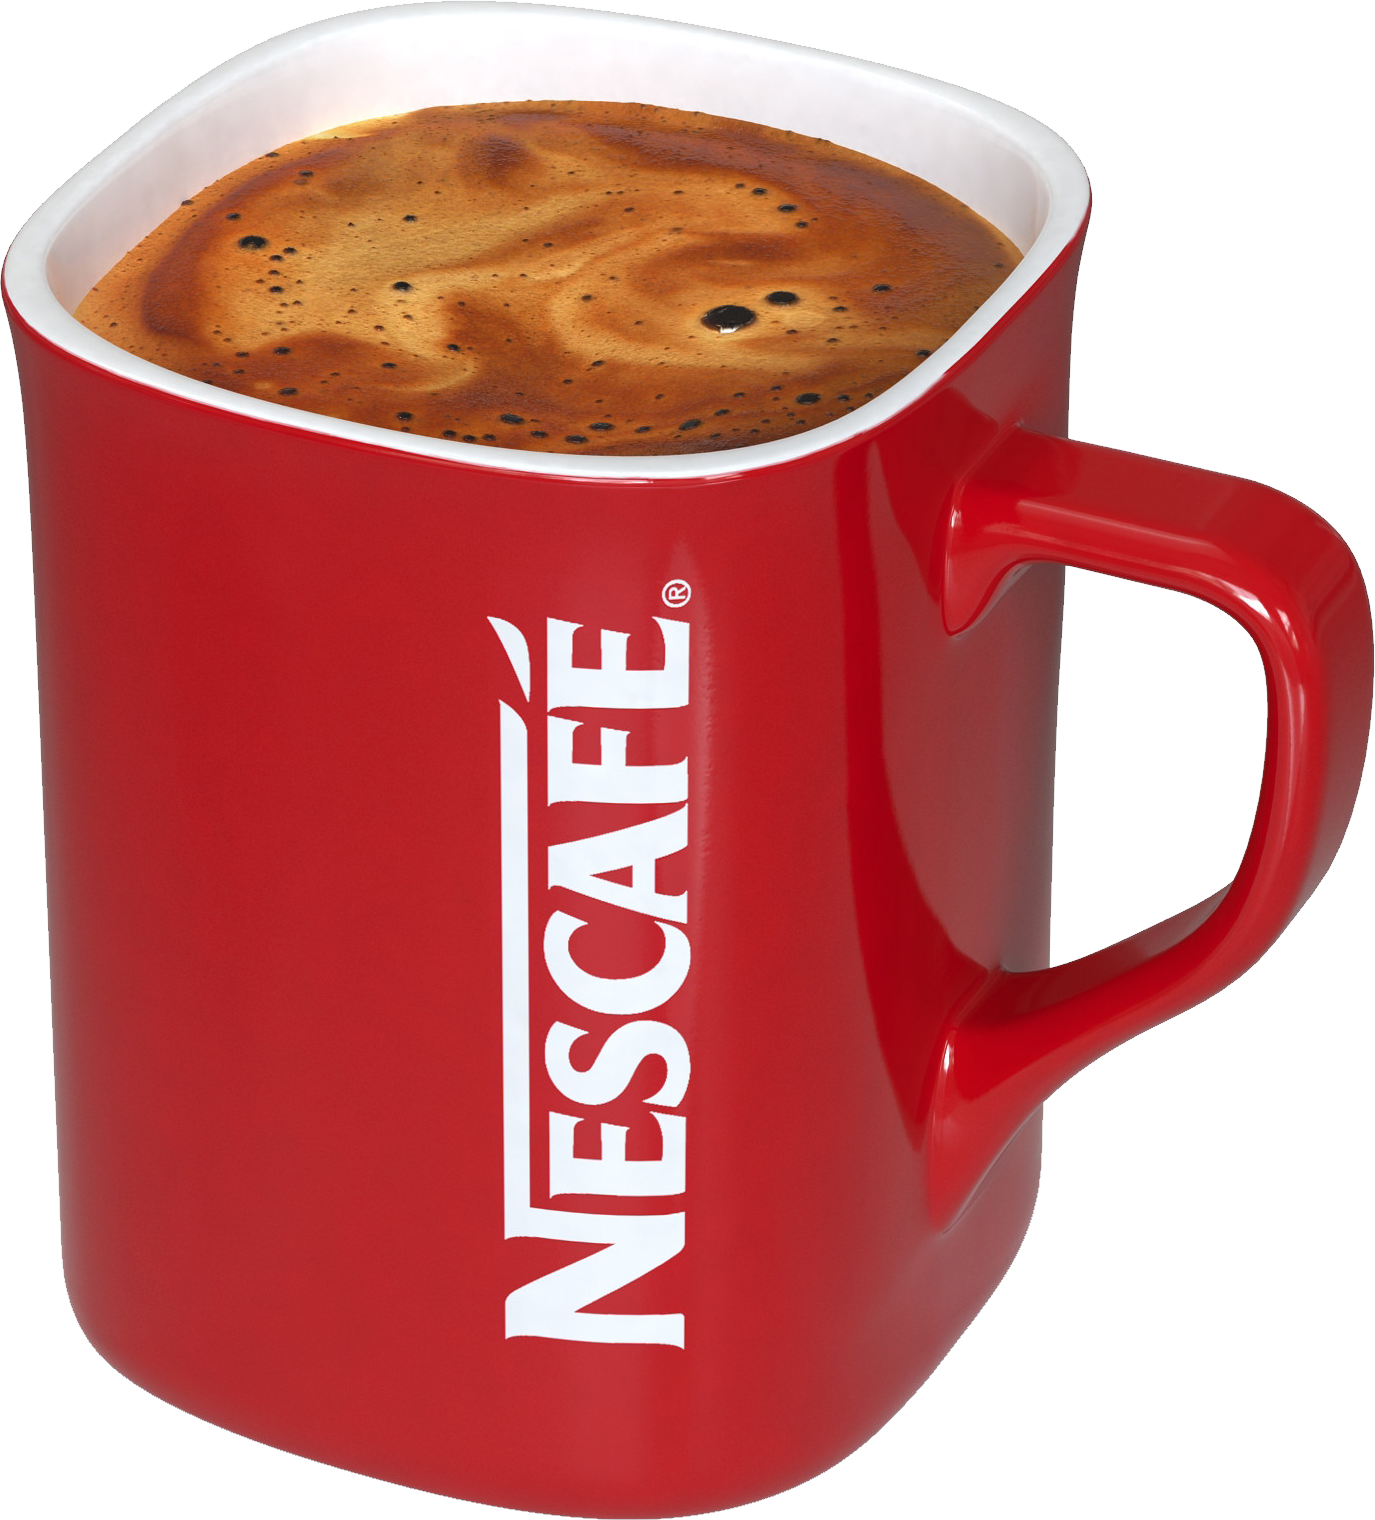 Coffee Mug PNG Pic Background